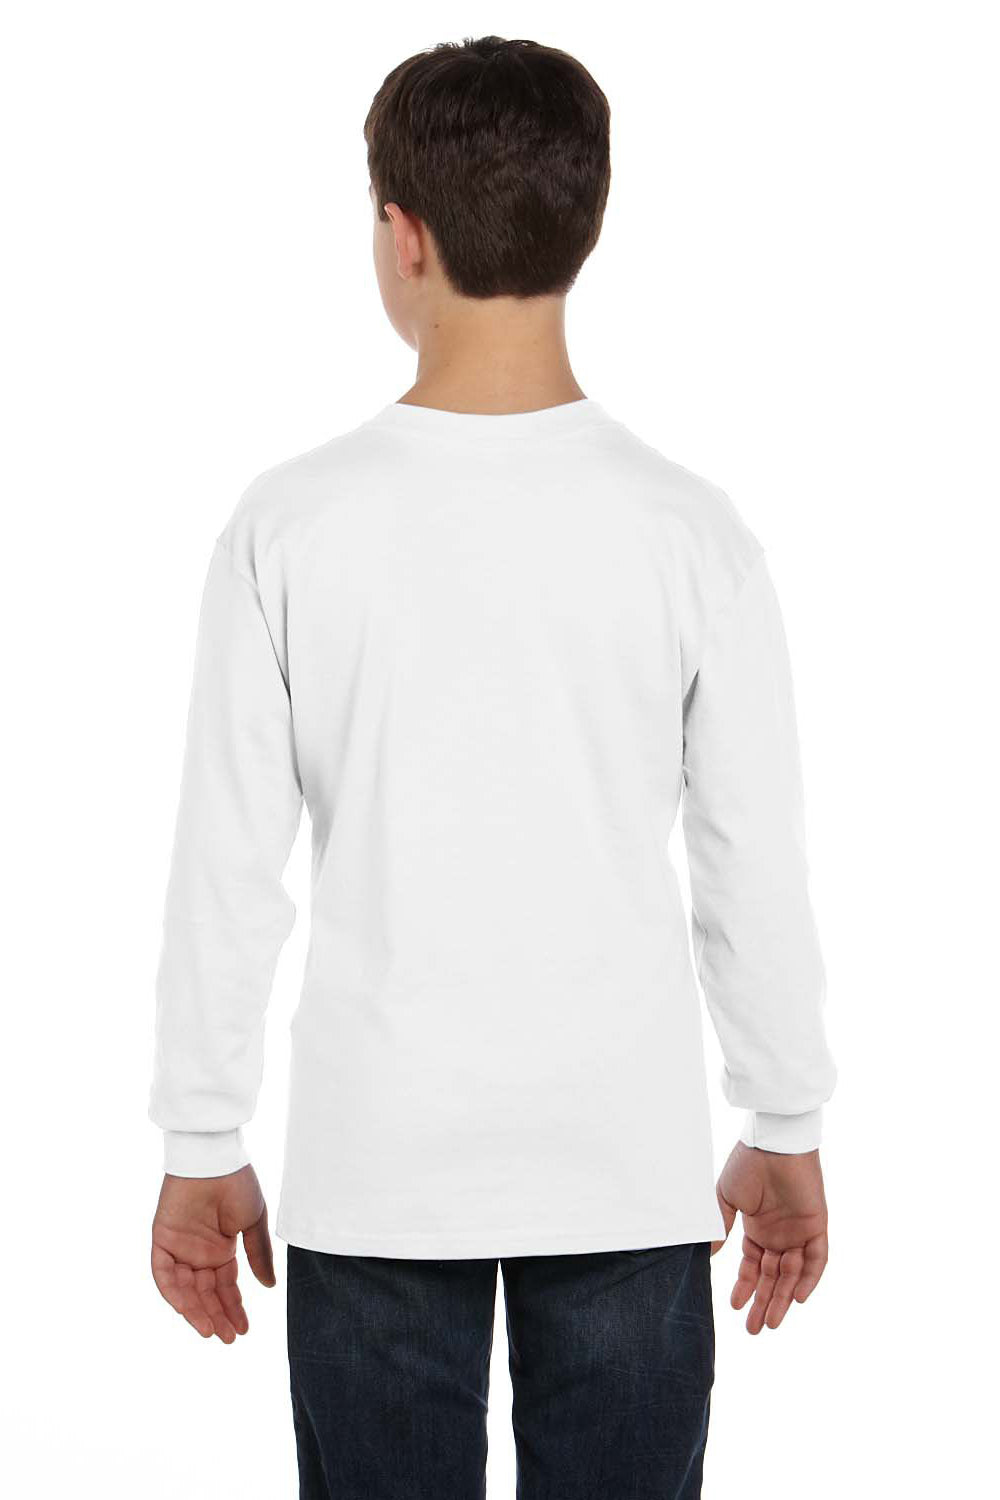 Gildan G540B Youth Long Sleeve Crewneck T-Shirt White Back